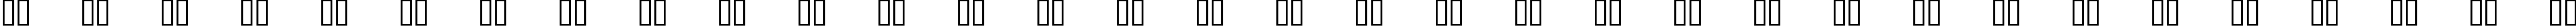 Пример написания русского алфавита шрифтом ZXSpectrum